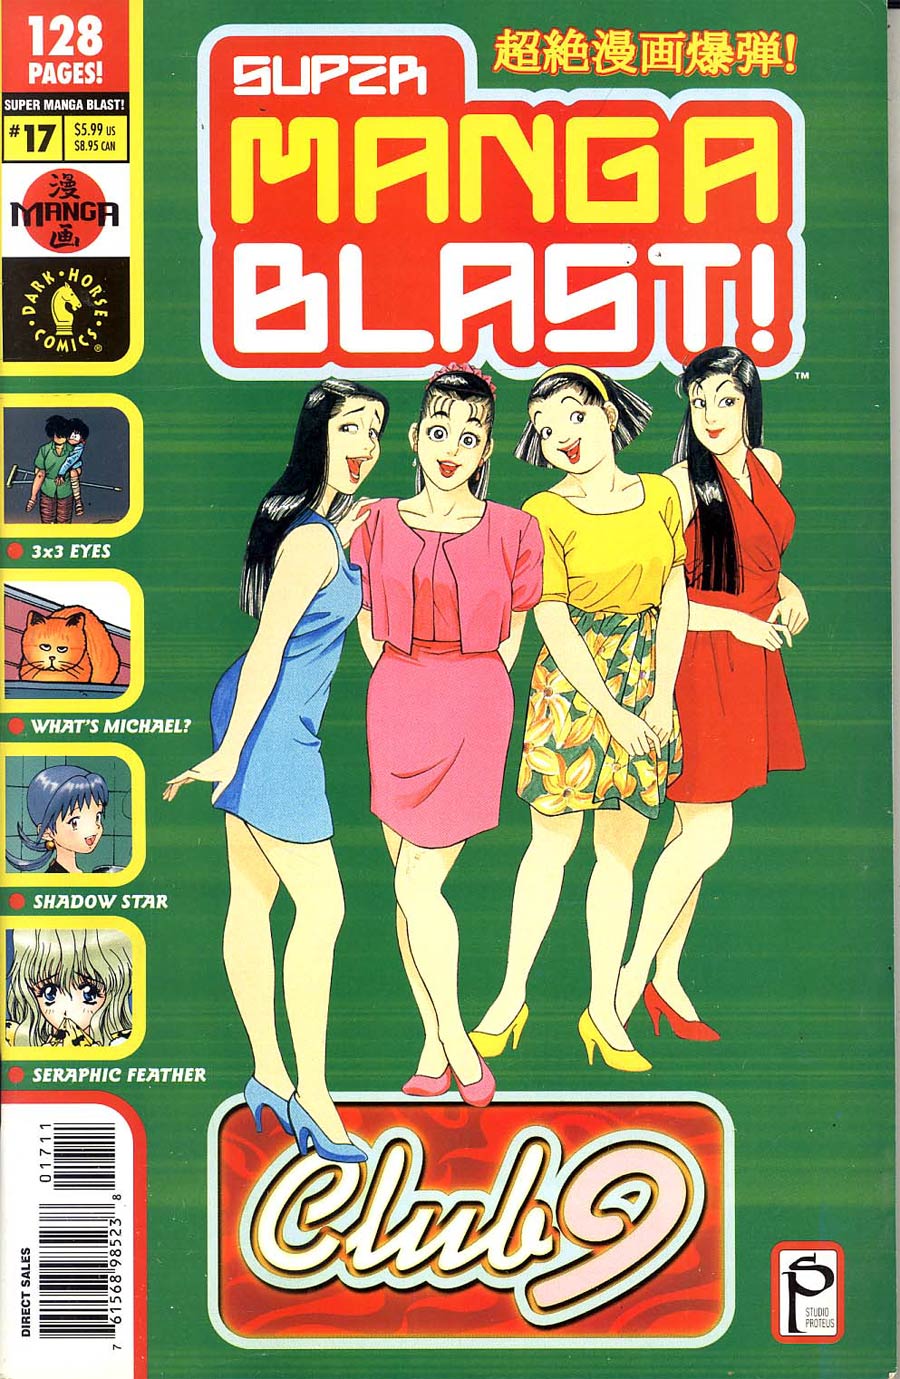 Super Manga Blast #17